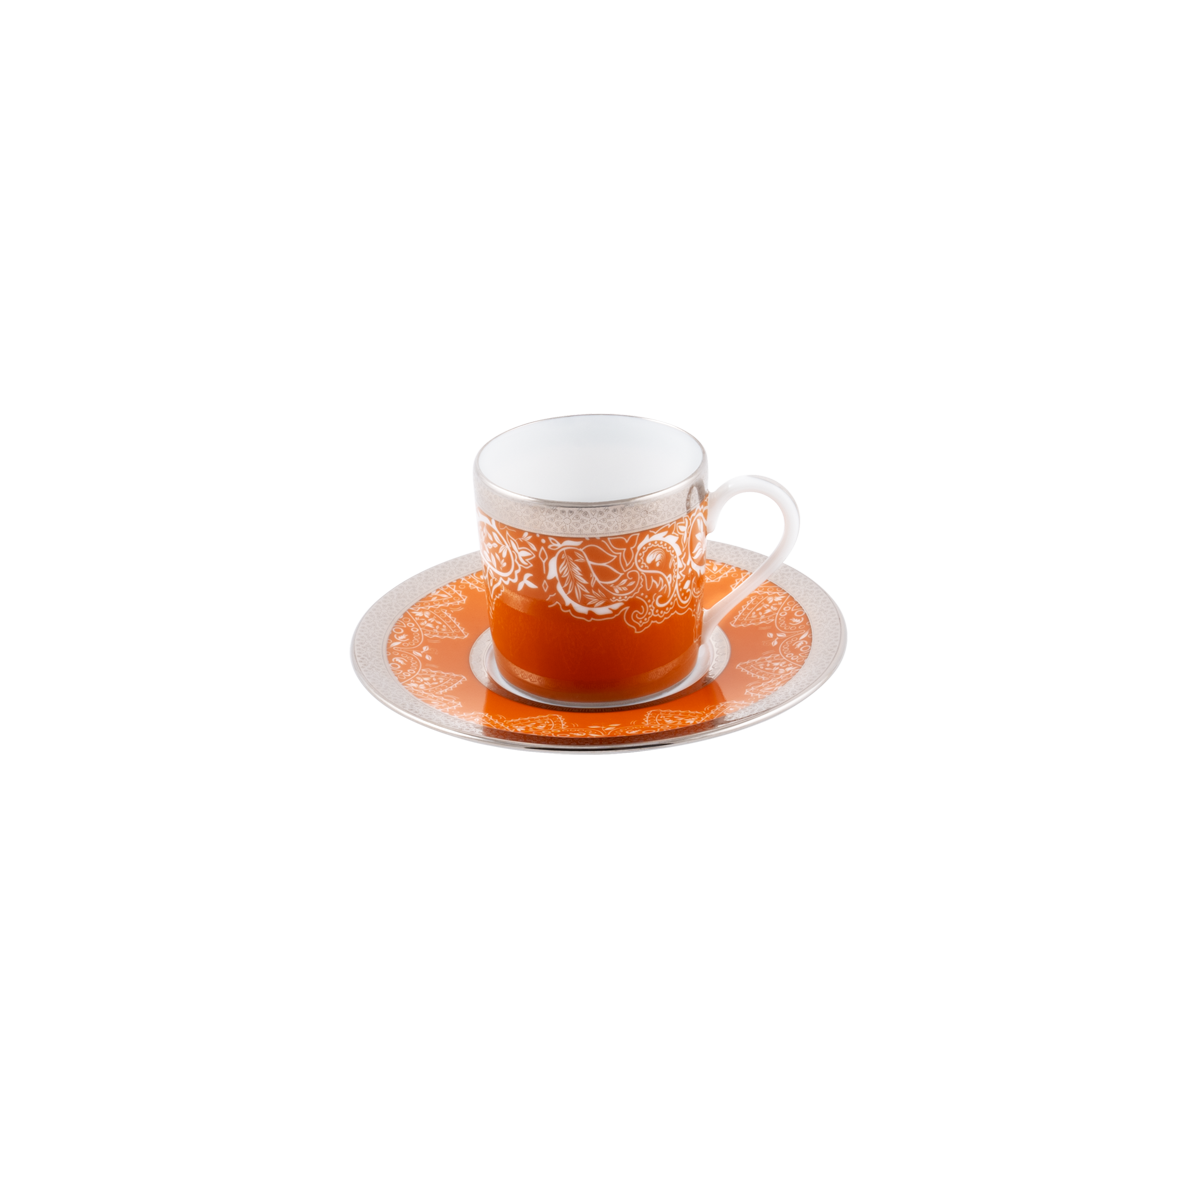 Set of 2 Coffee Cups and Saucers - Romane Orange